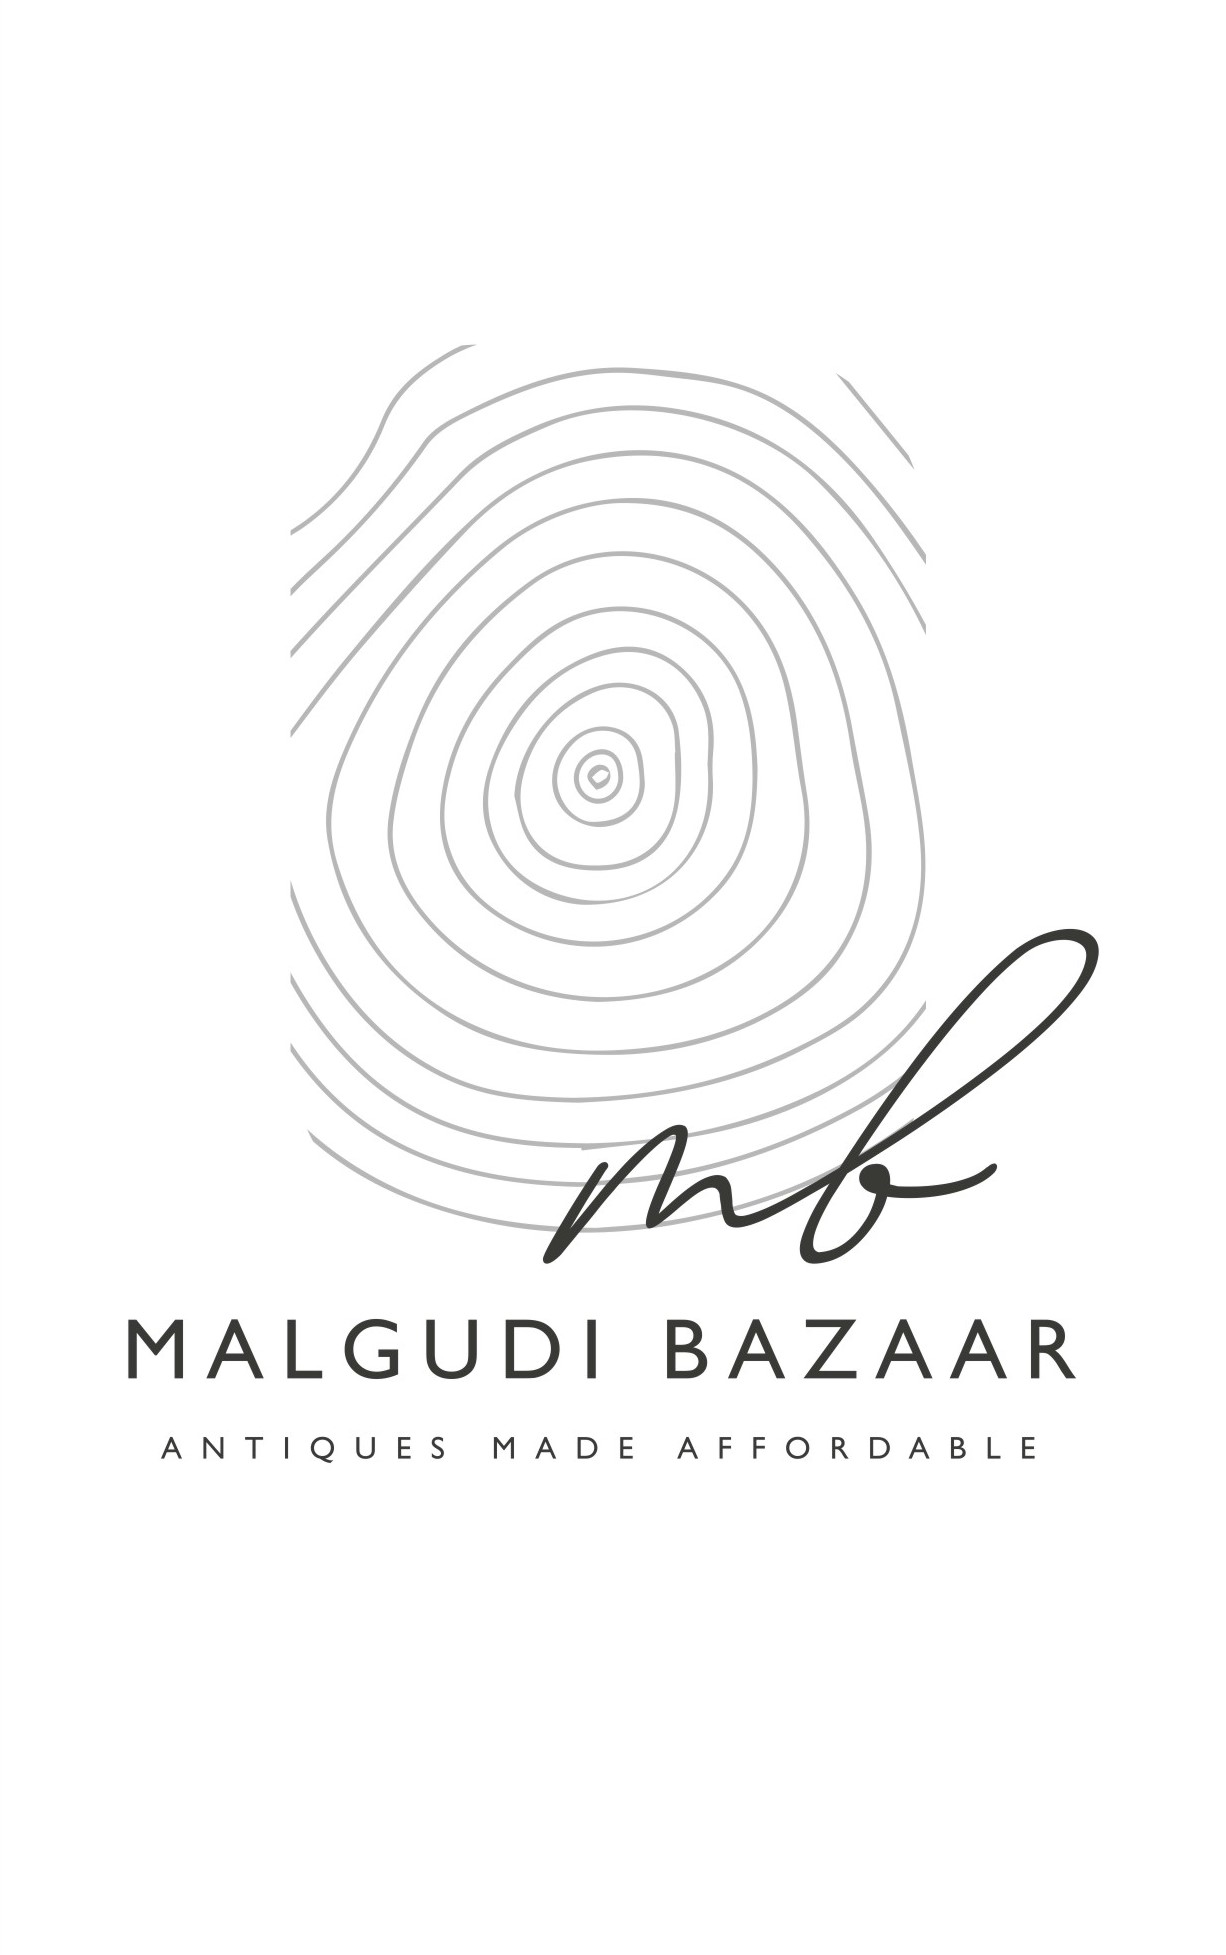 Malgudi Bazaar Logo